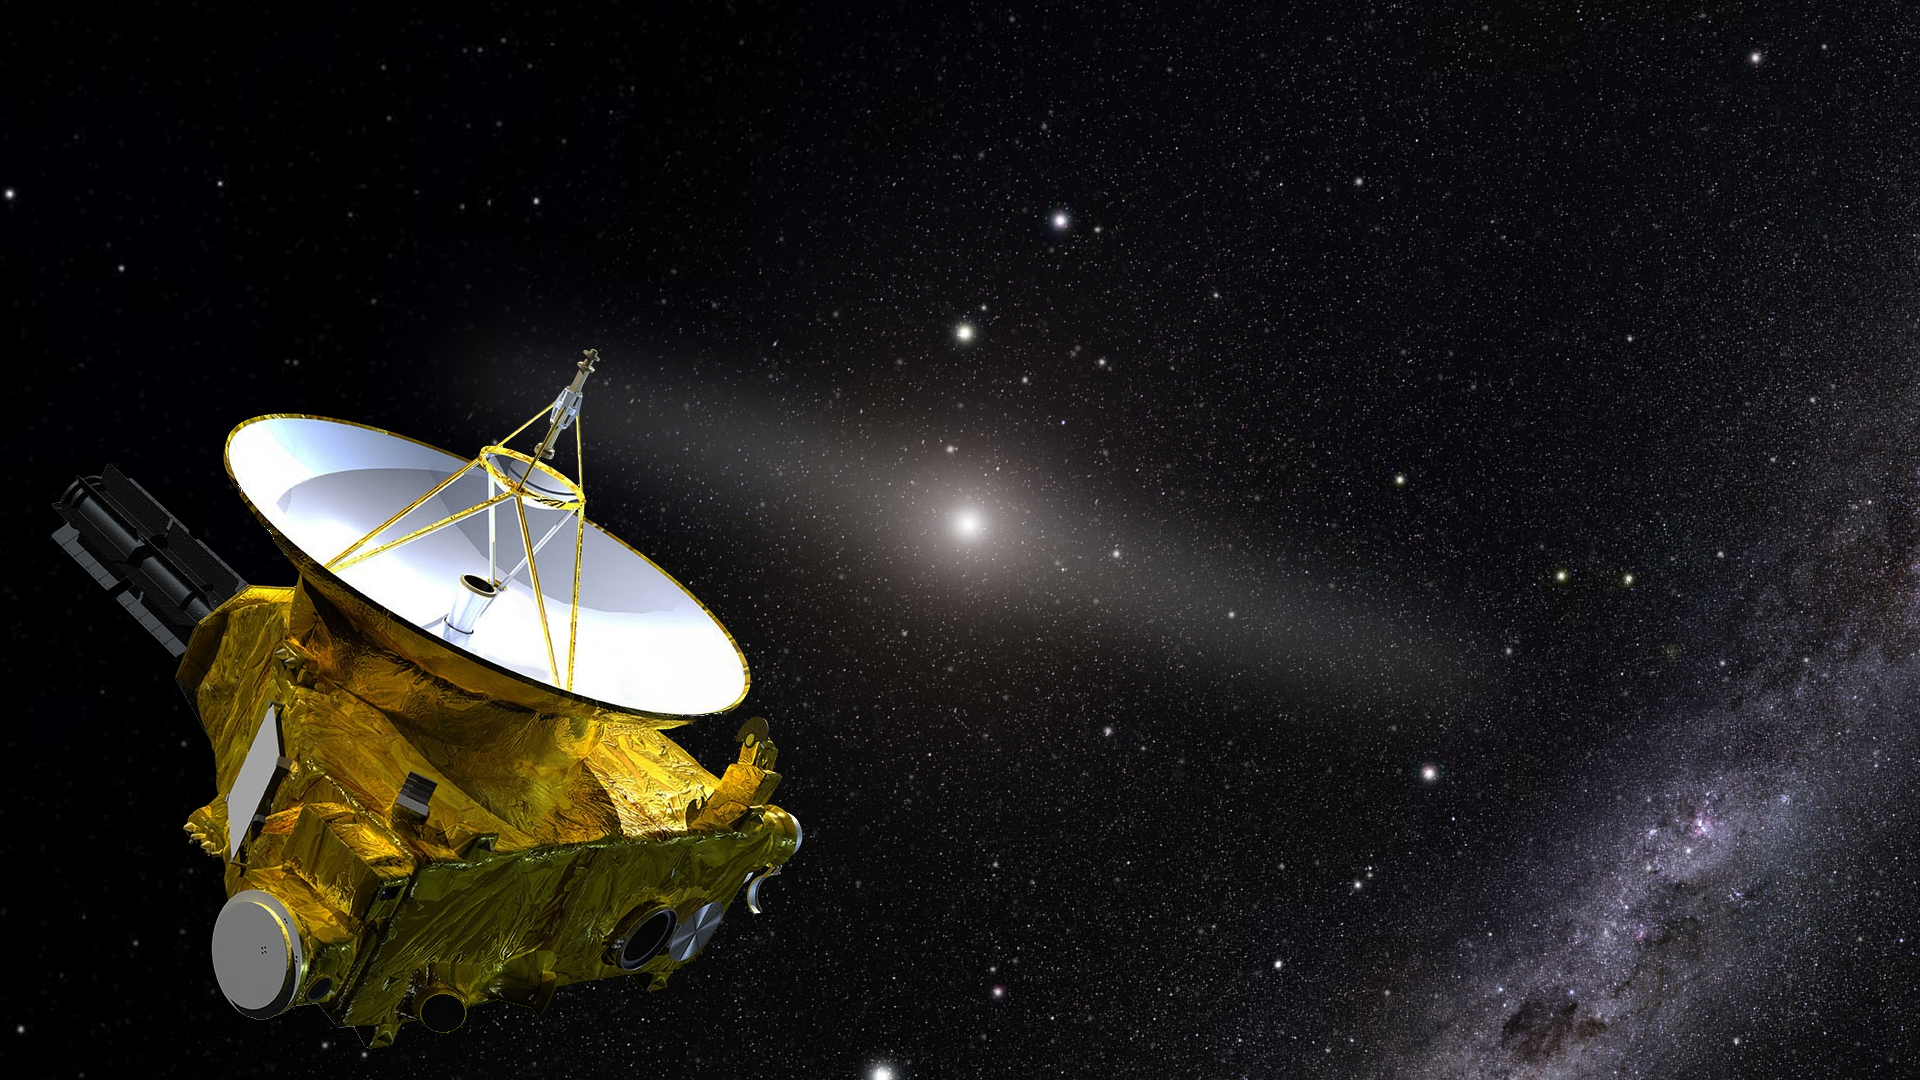 slide 1 - New Horizons spacecraft in deep space